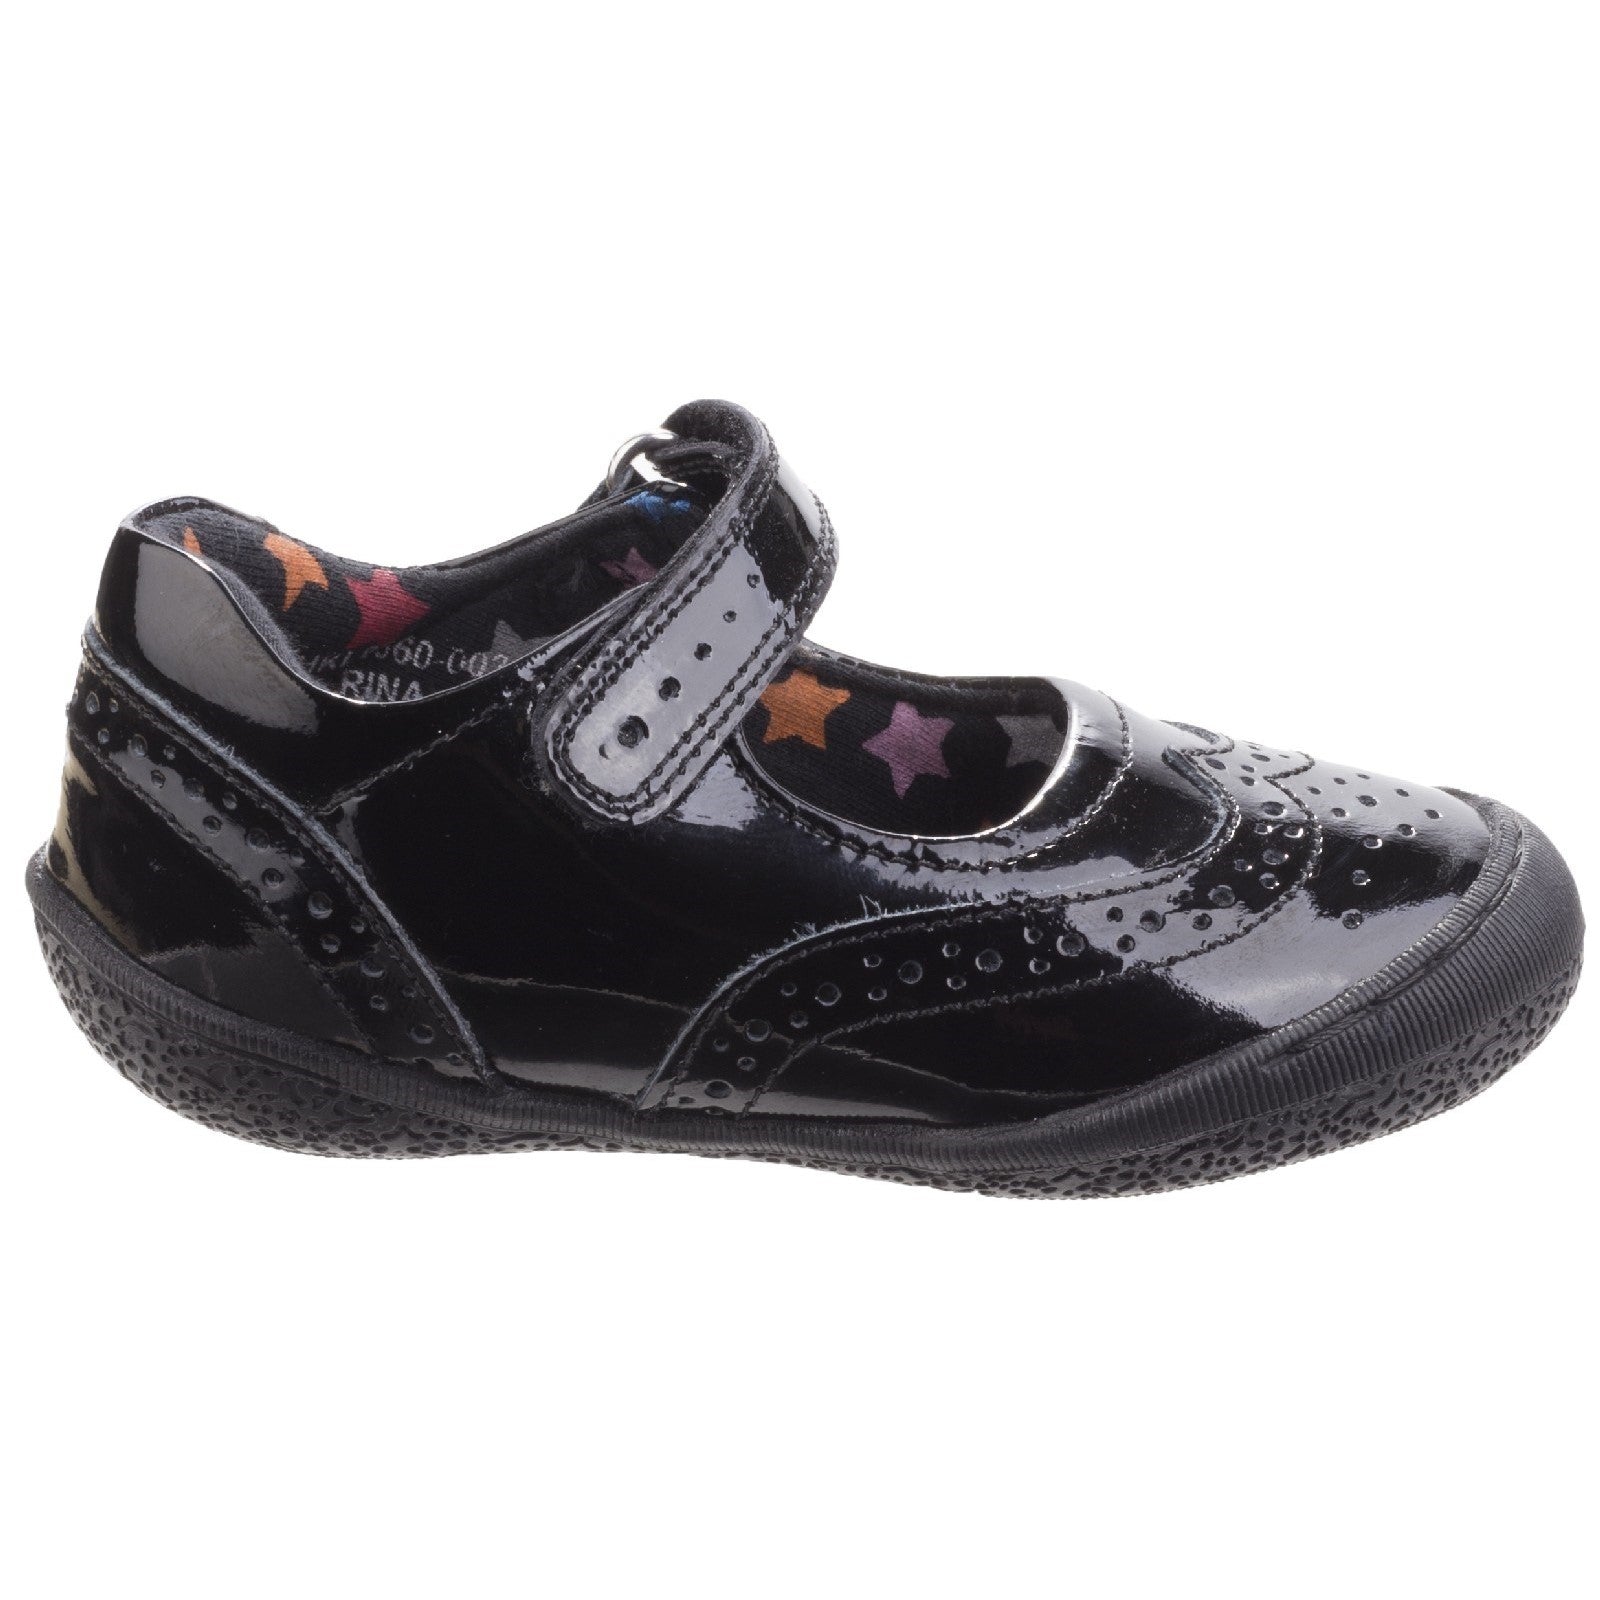 Hush Puppies Girls Rina Patent Leather School Shoes - Black